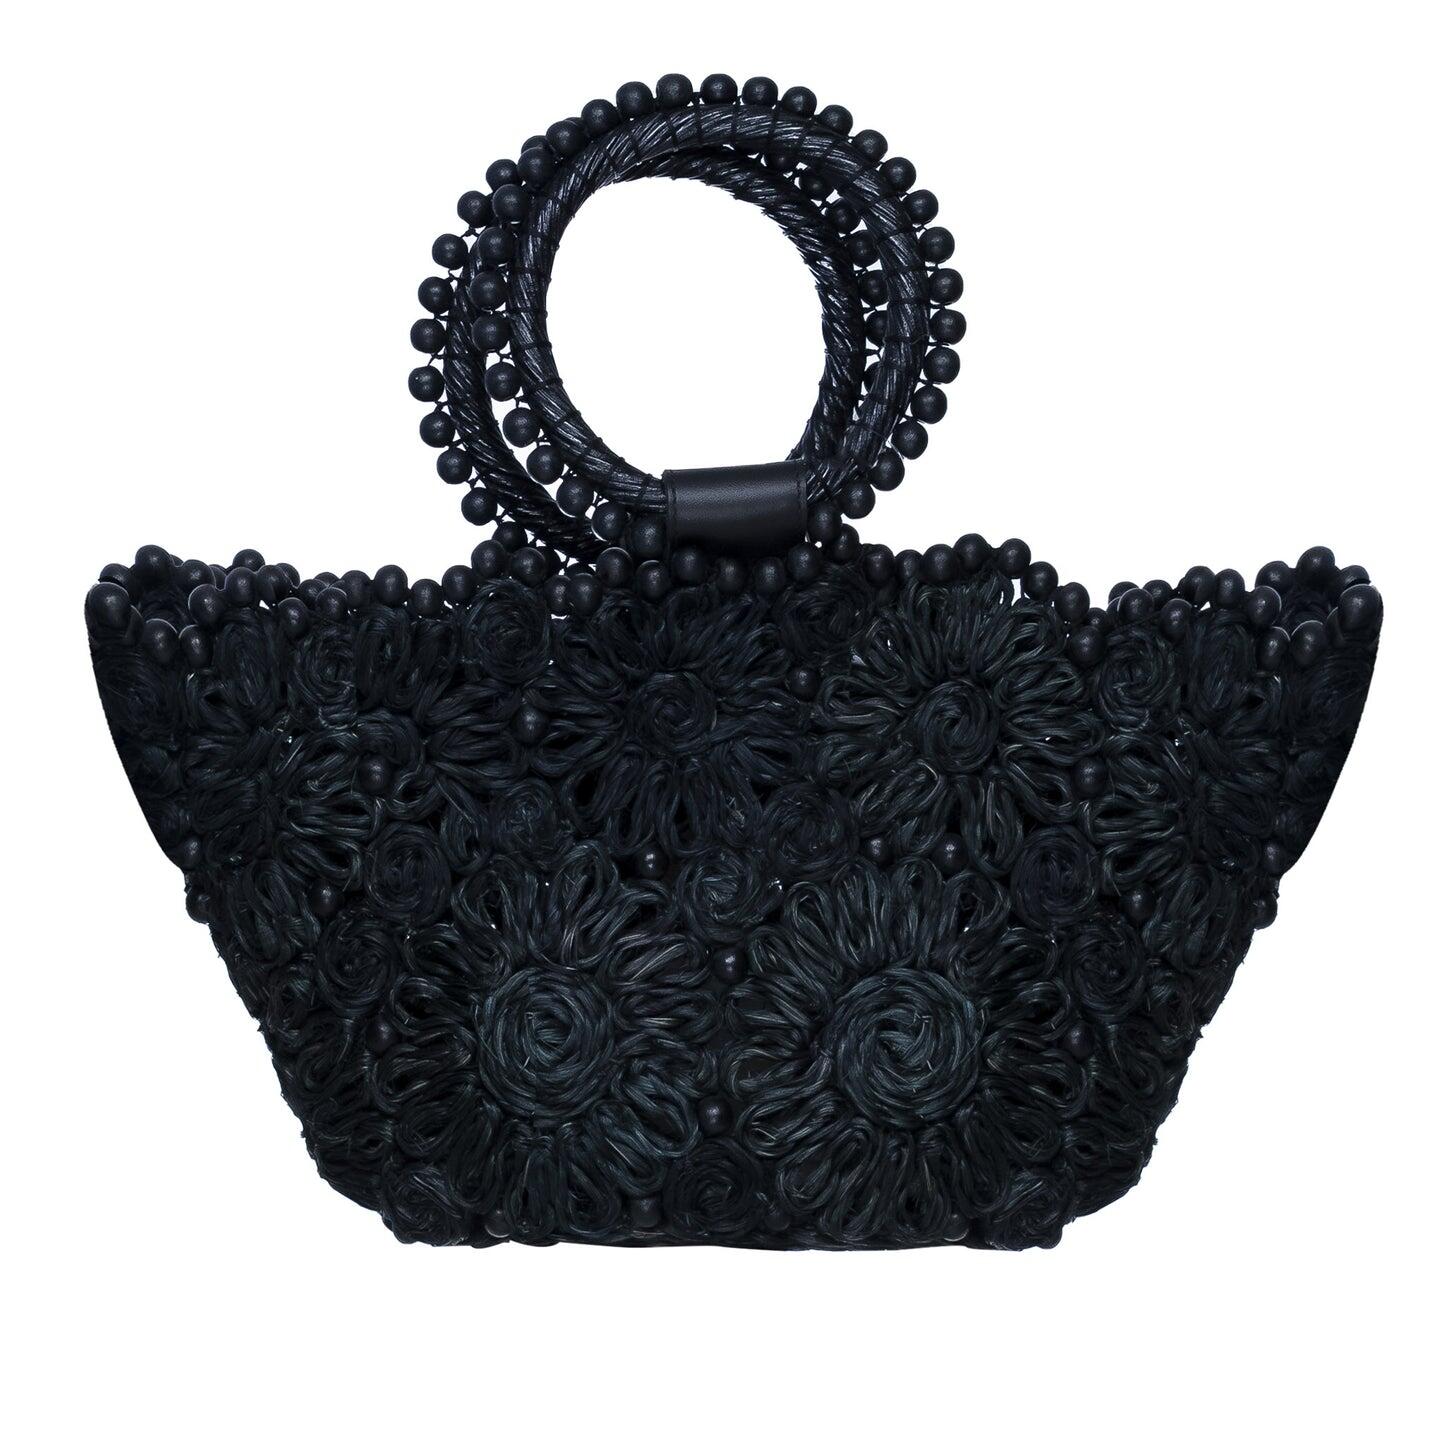 Seaflower Handbag Large Black